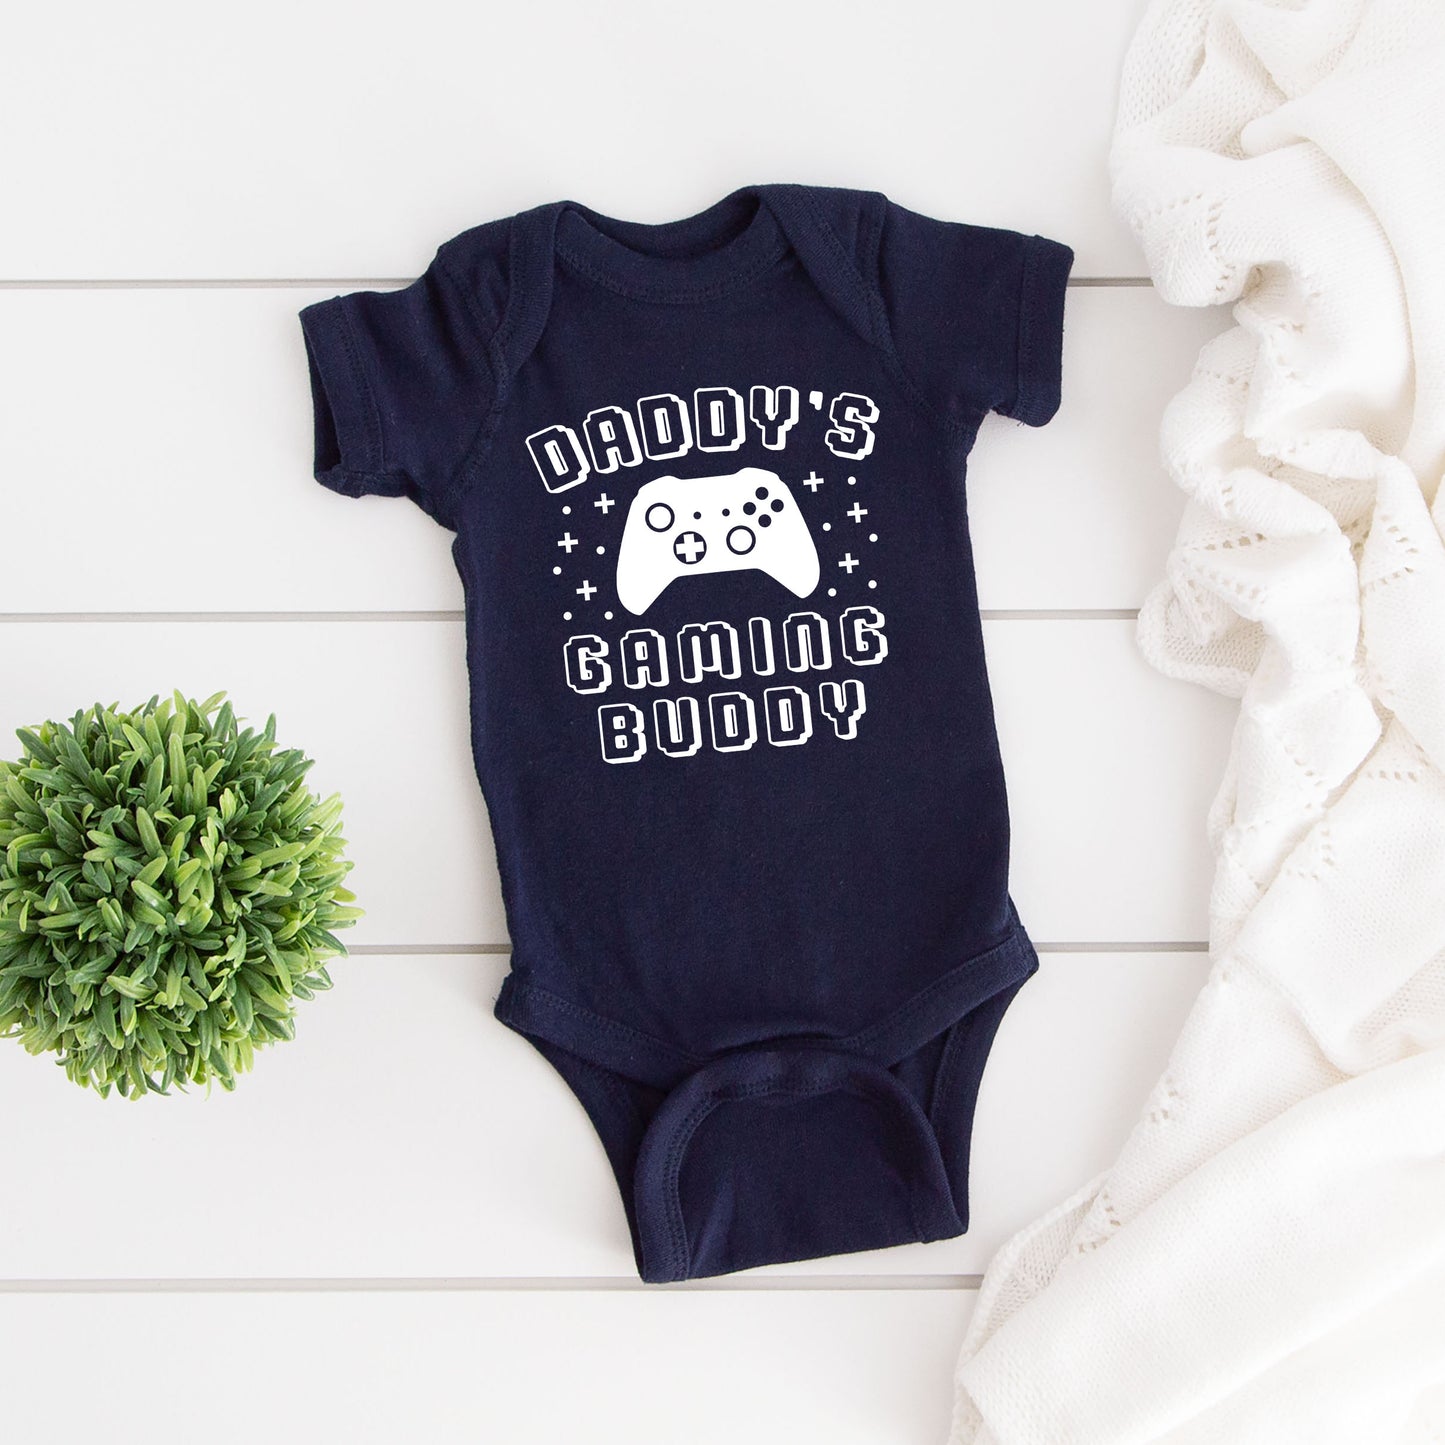 Daddy's Gaming Buddy | Baby Graphic Short Sleeve Onesie